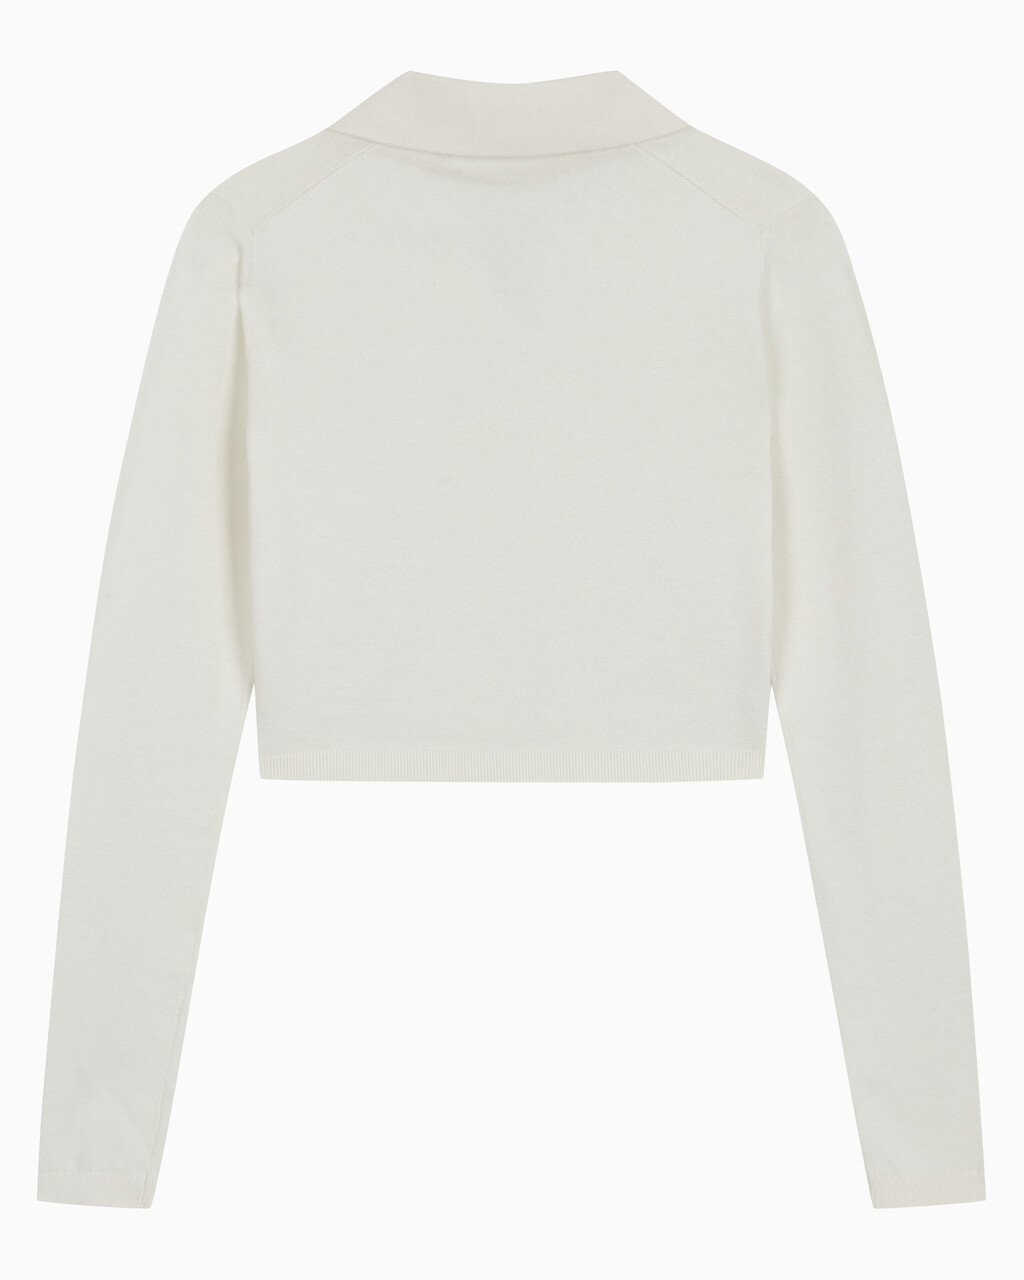 Buy 여성 브이넥 슬림 크롭 스웨터 in color WHITE